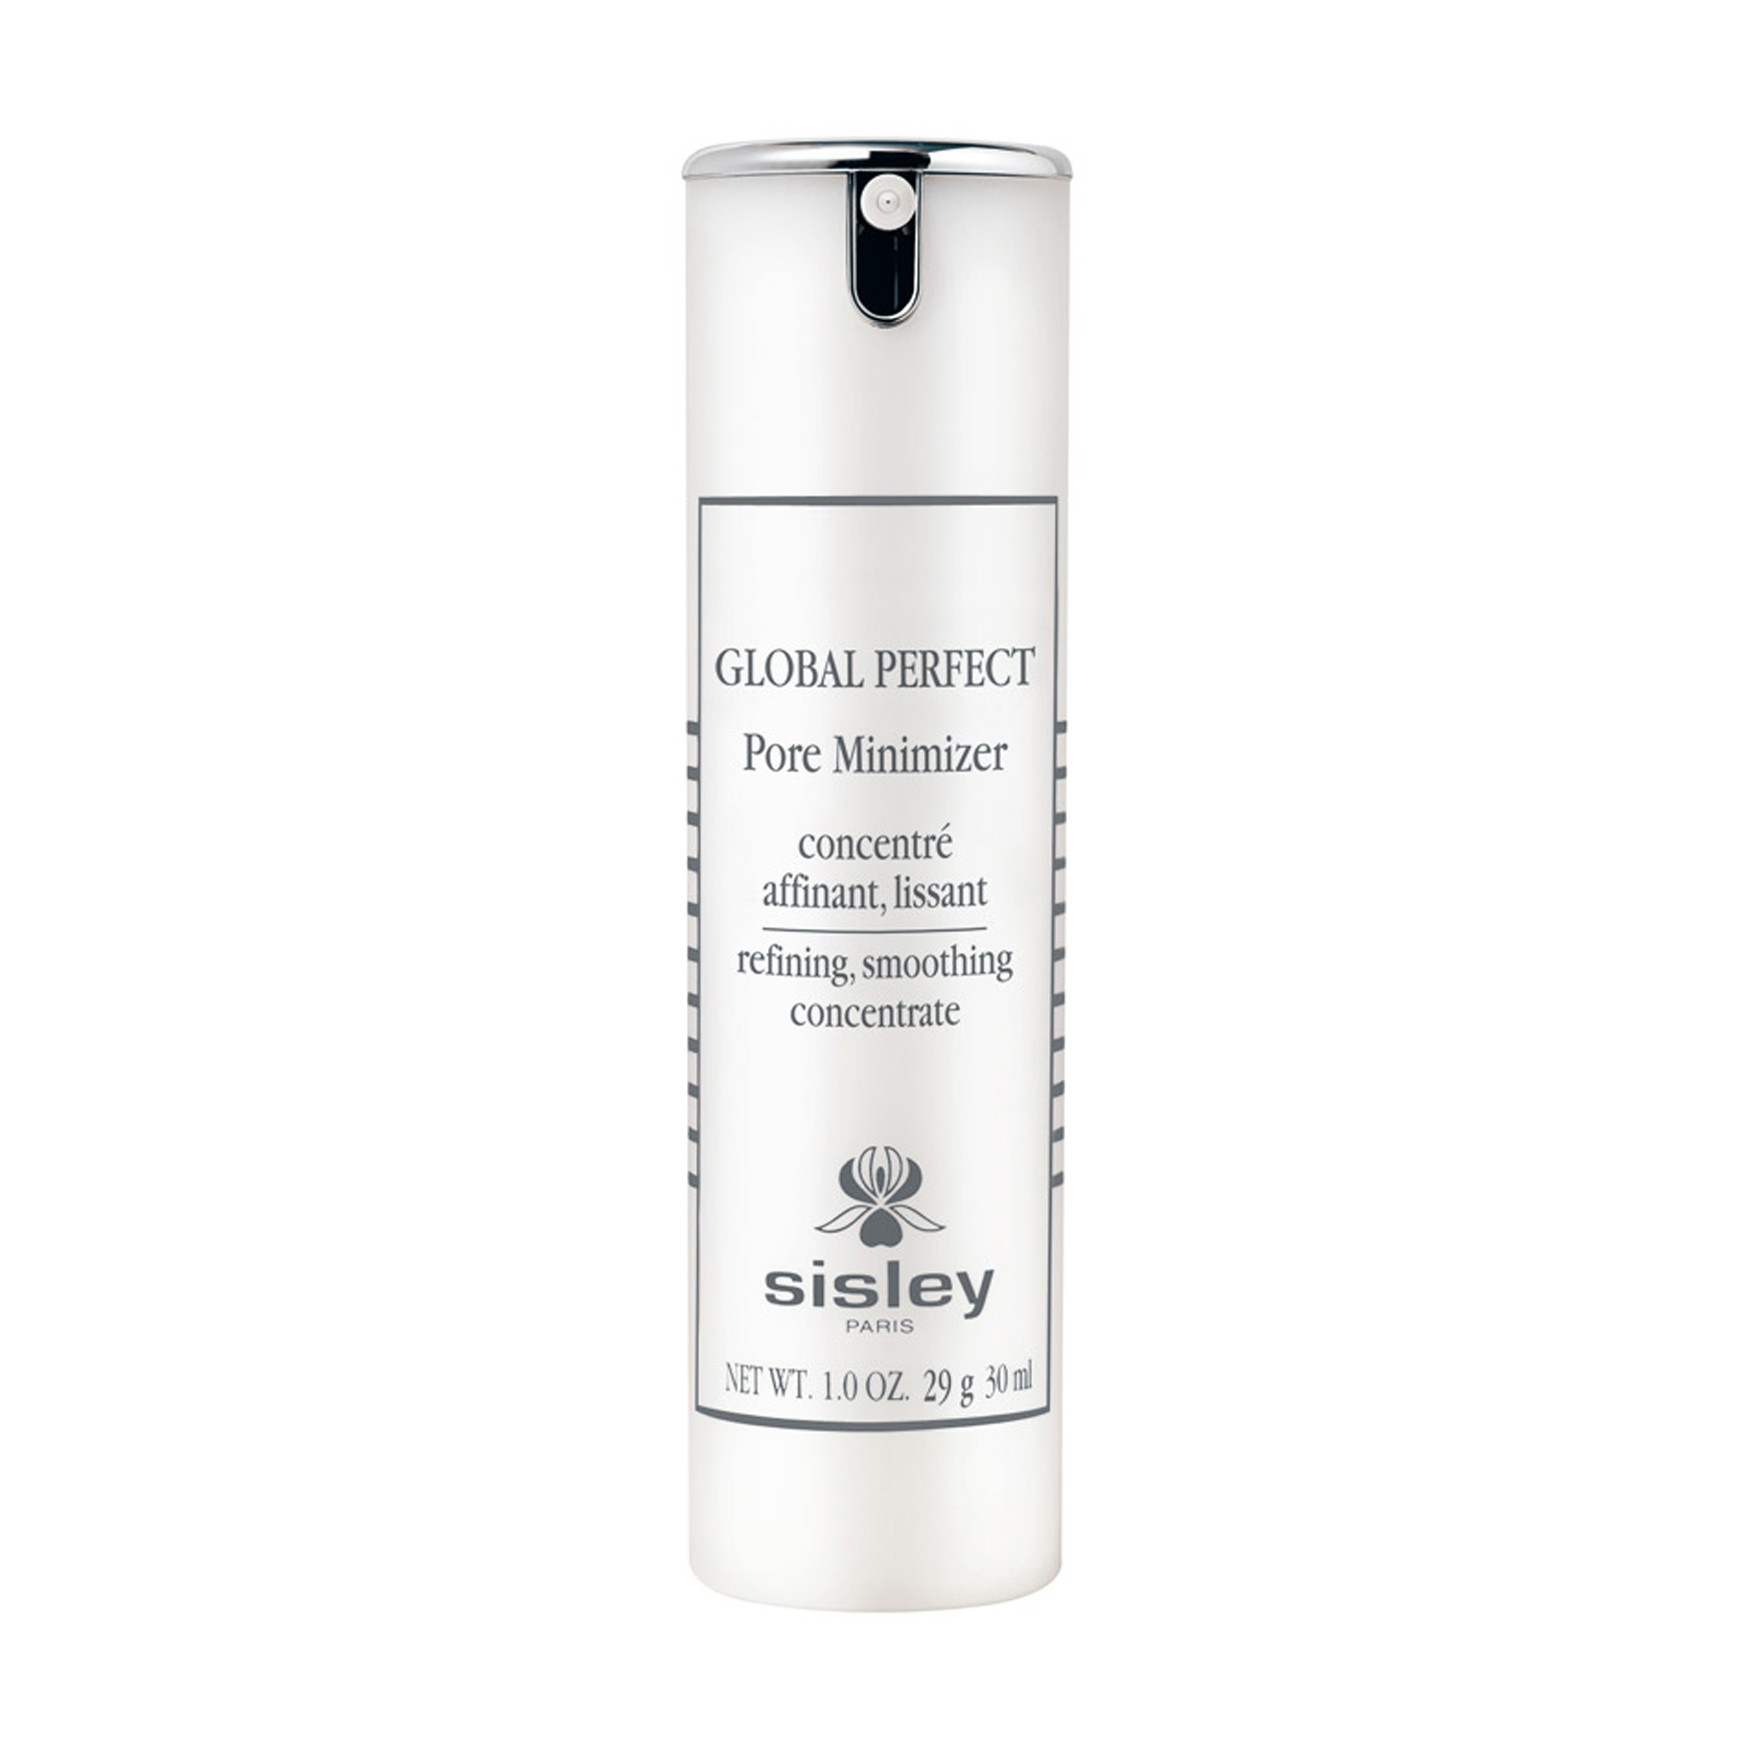 Sisley-Paris Global Perfect Pore Minimizer 30ml | Space NK